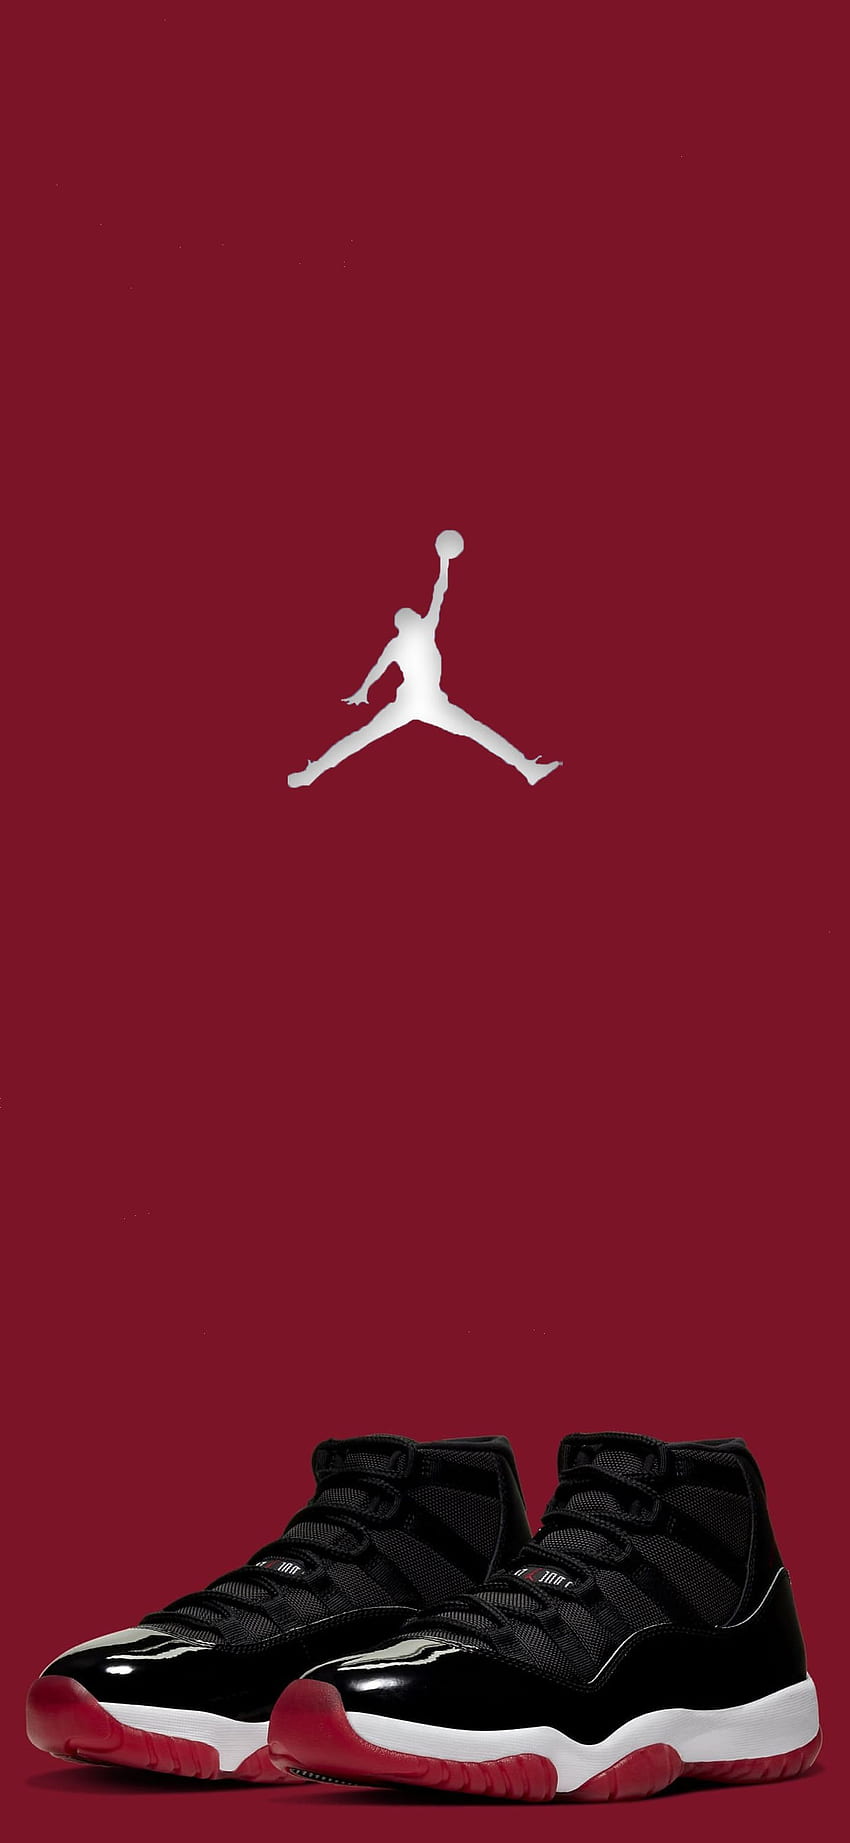 Air Jordan 11's (Bred). Jordan logo